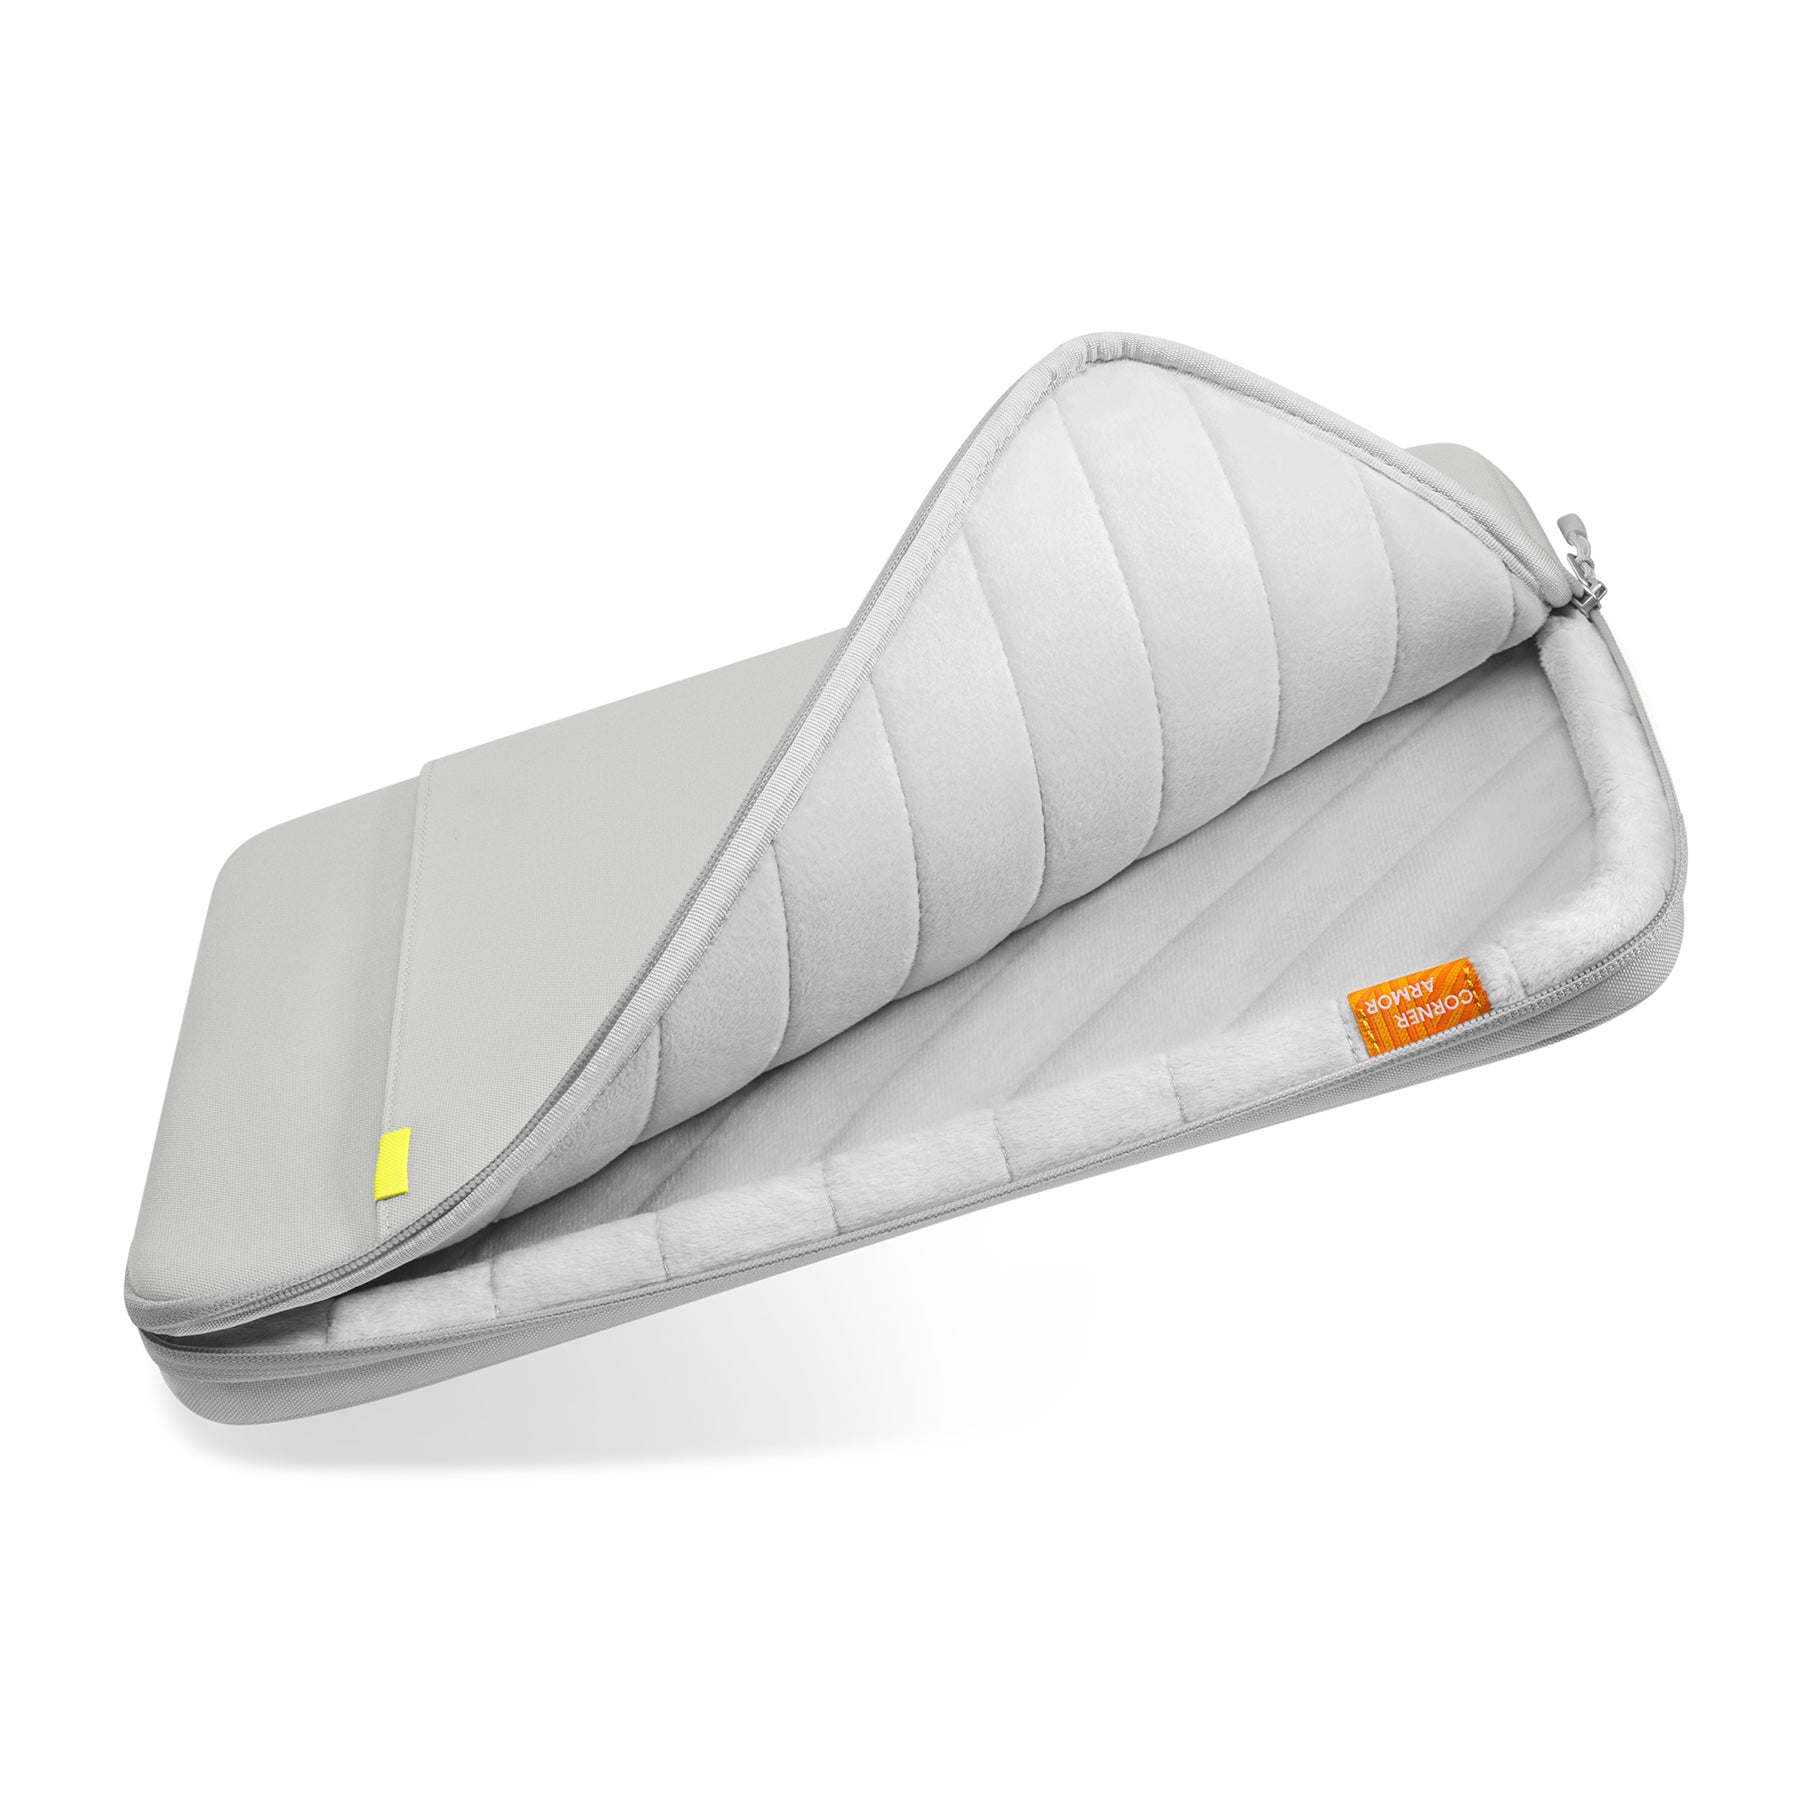 tomtoc 16 Inch Versatile 360 Protective Laptop Sleeve / MacBook Sleeve - Gray